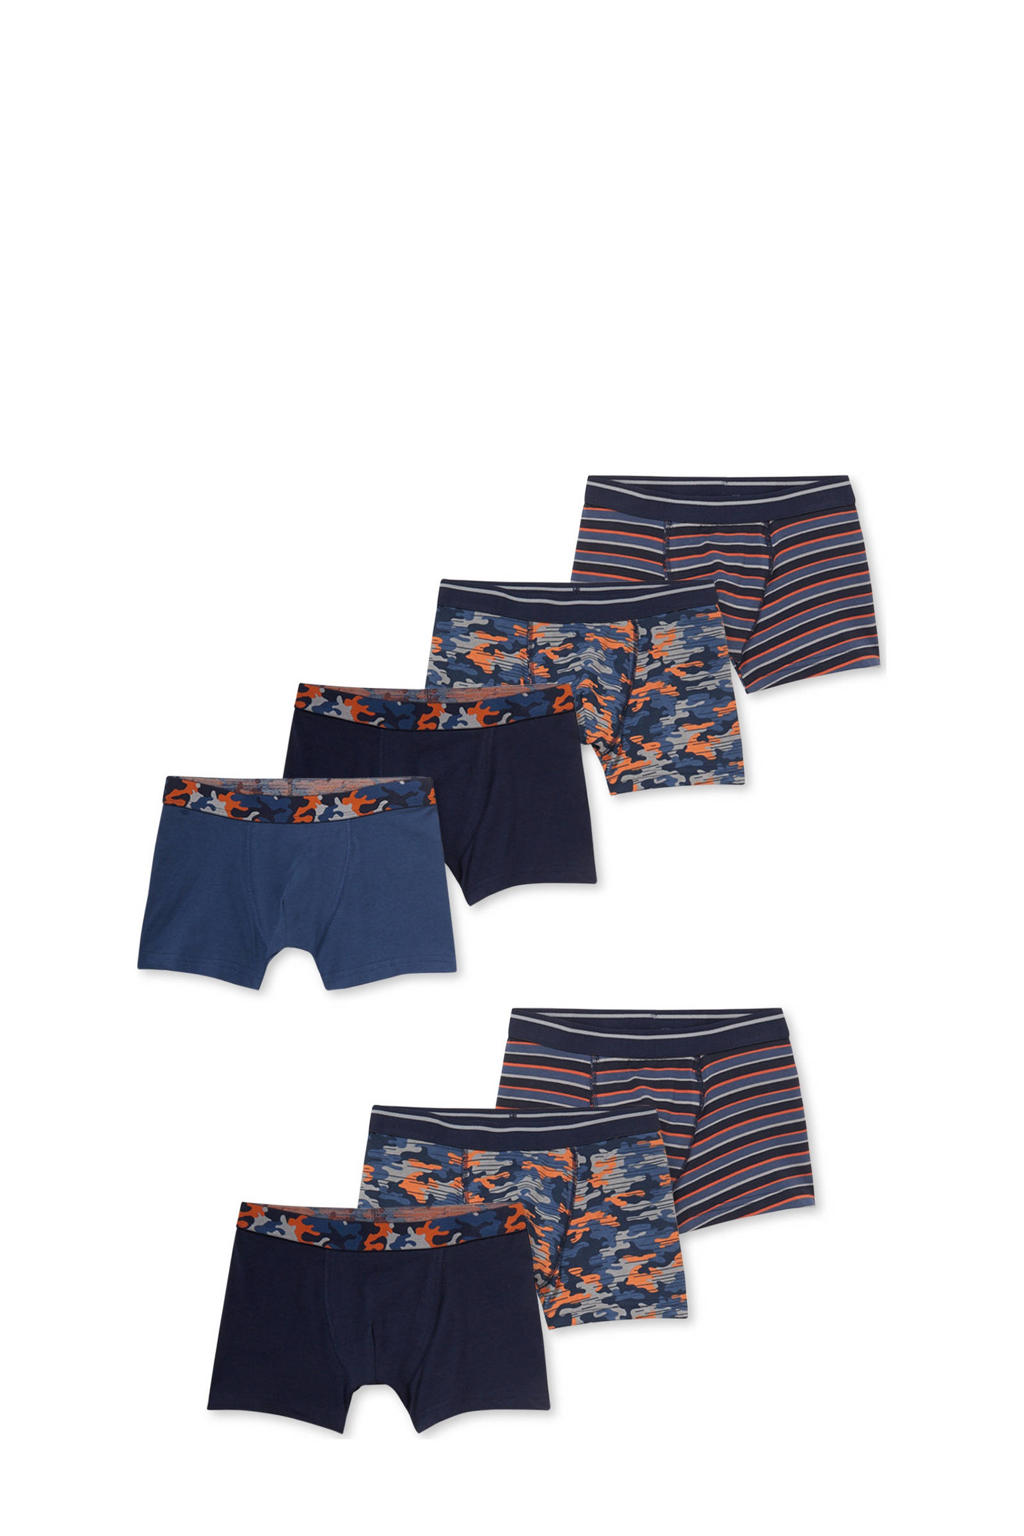 C&A   boxershort - set van 7 blauw/oranje